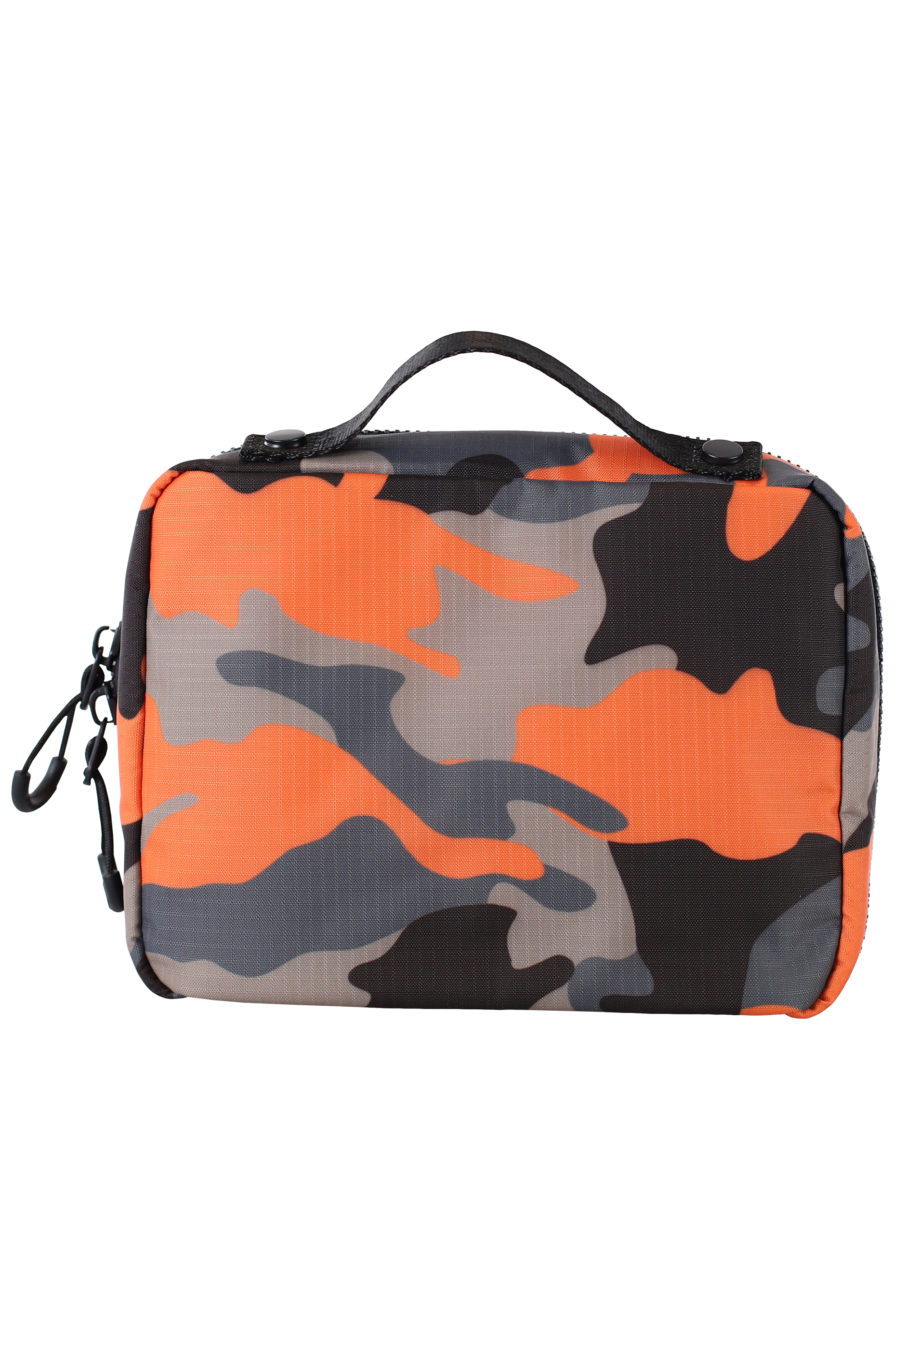 Orange camouflage toiletry bag with ceresio logo - IMG 2286